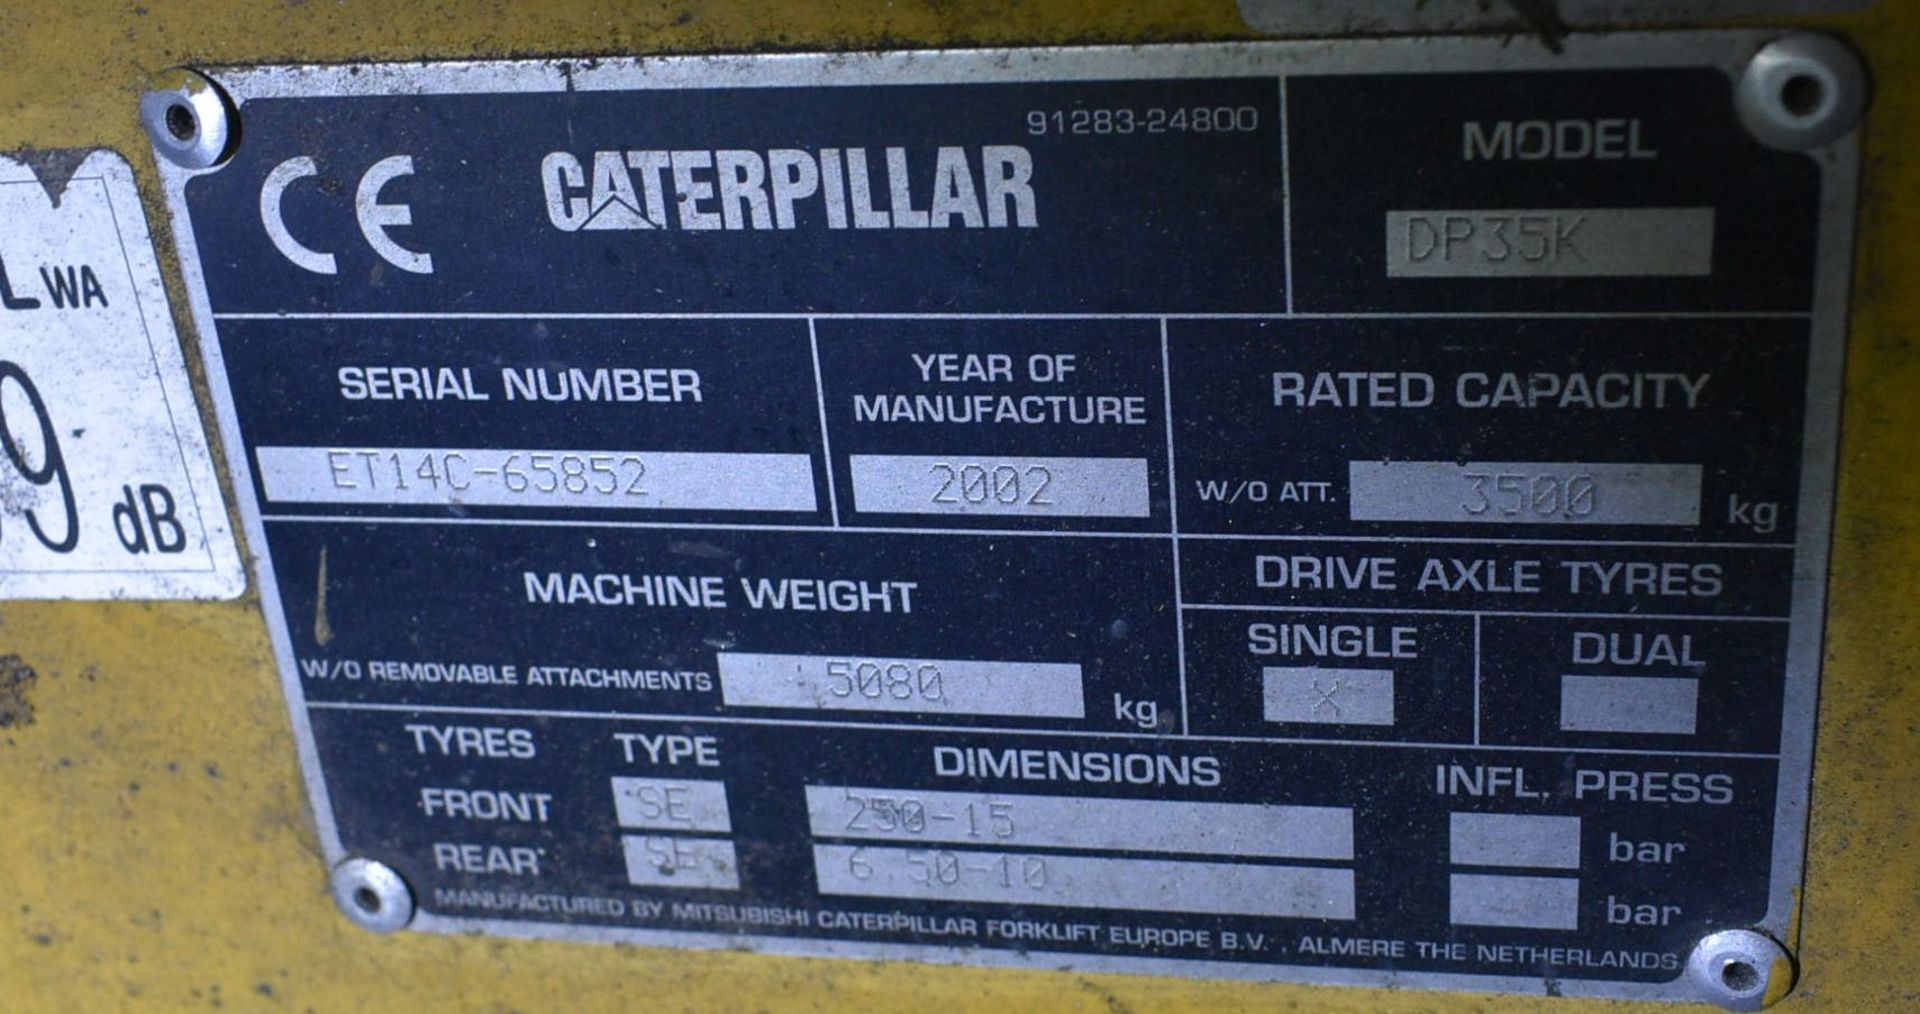 Caterpillar DP35K 3500kg rated capacity DIESEL ENGINE FORK LIFT TRUCK, serial no. ET14C-65 852, year - Image 7 of 11